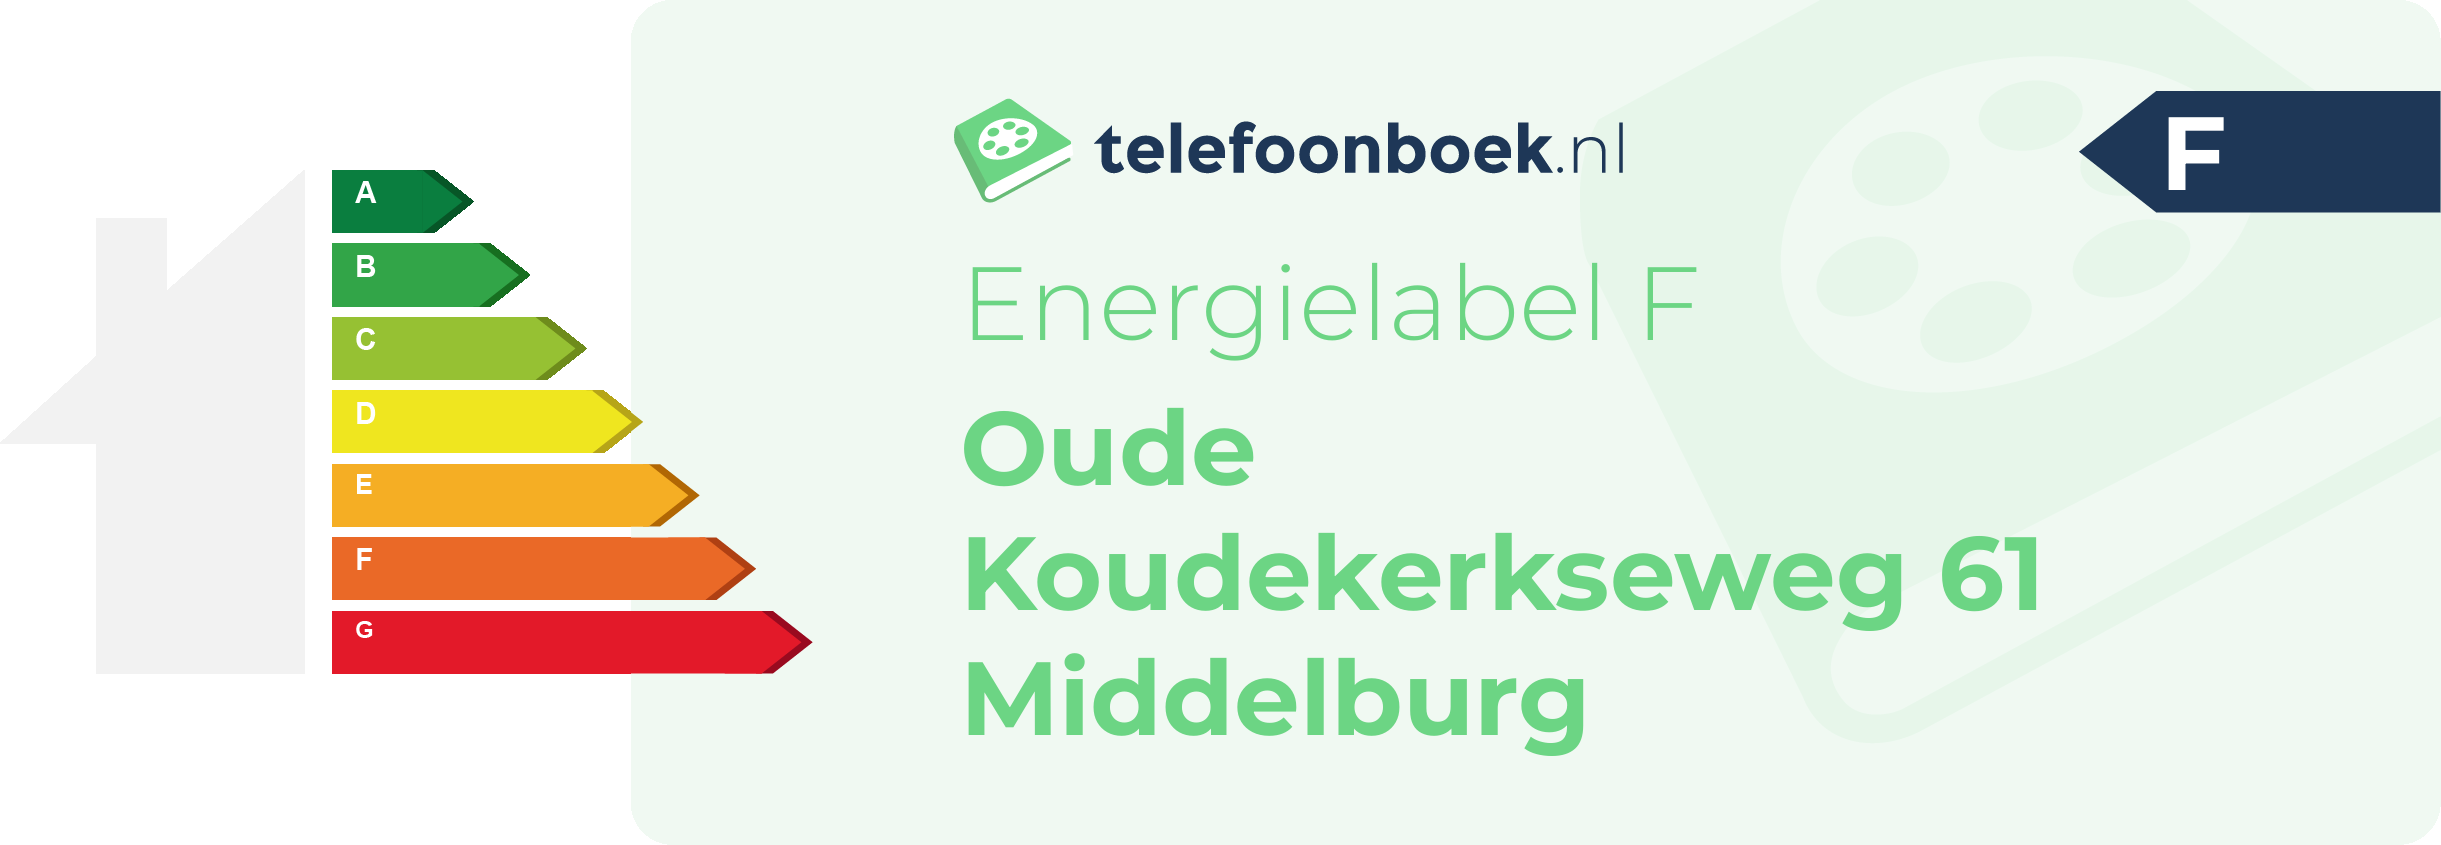 Energielabel Oude Koudekerkseweg 61 Middelburg